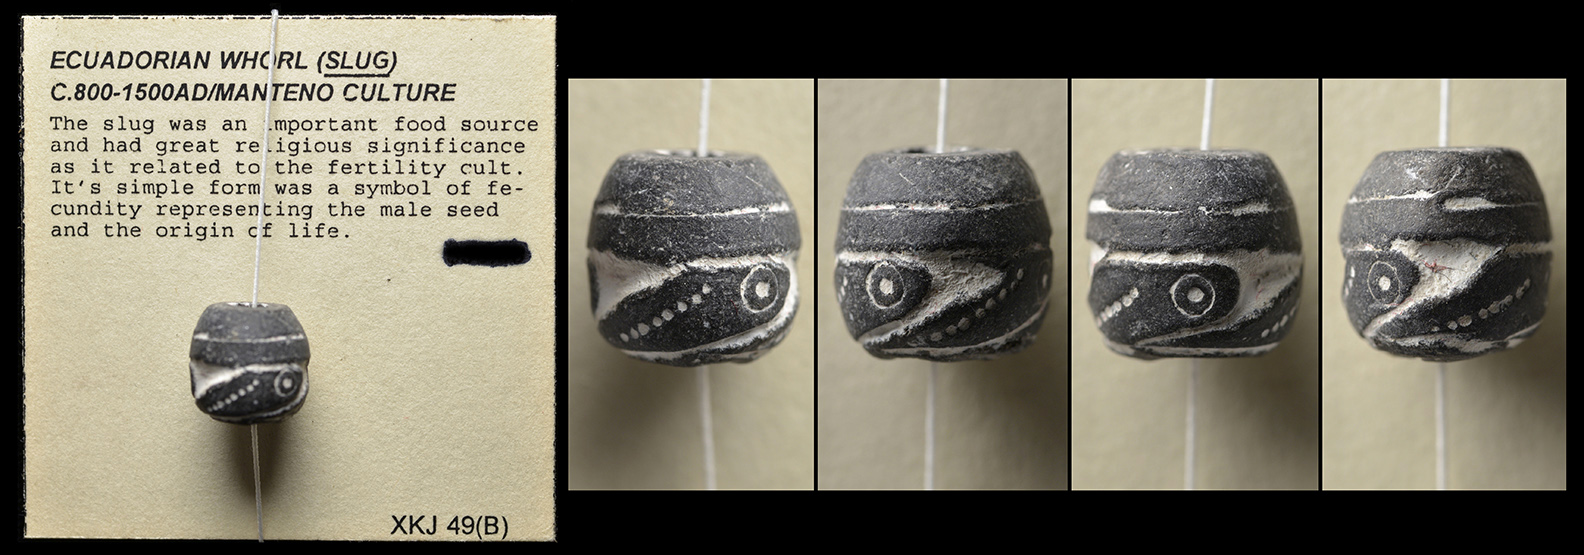 Sold at Auction: 3 Ecuadorean Manteno Pottery Stamps w/ Zoomorph Motifs